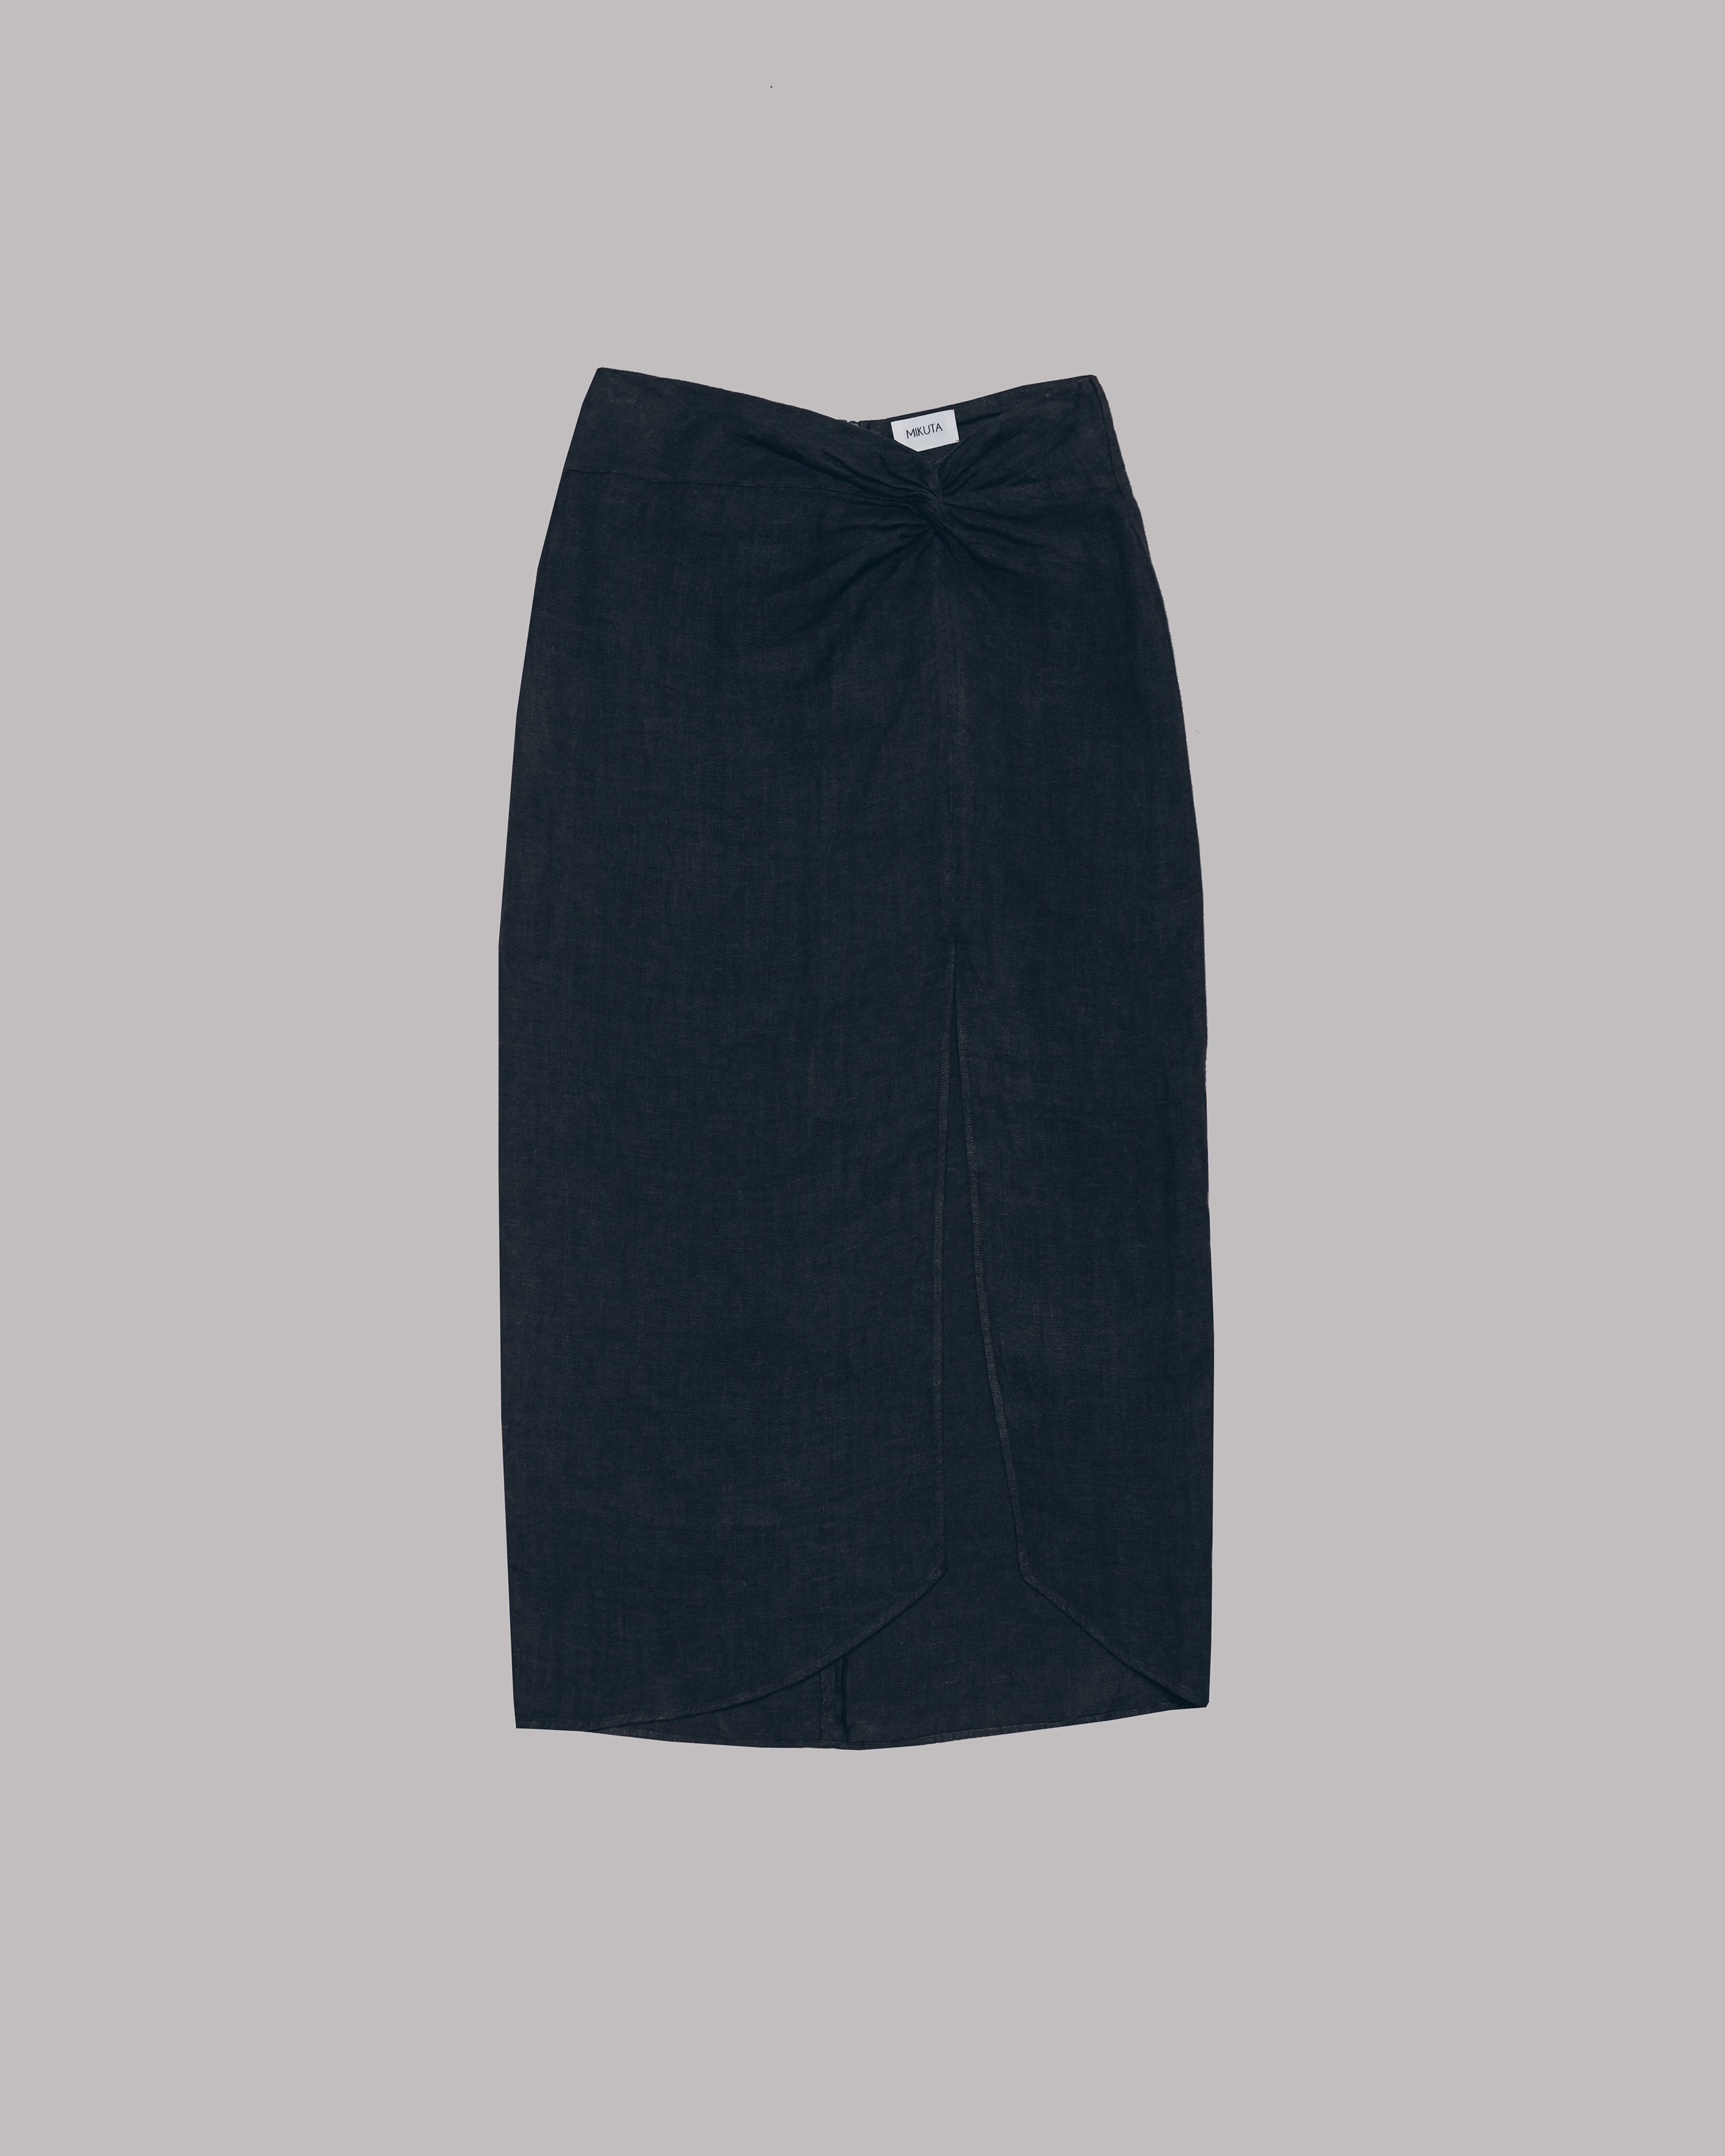 The Dark Long Linen Knot Skirt